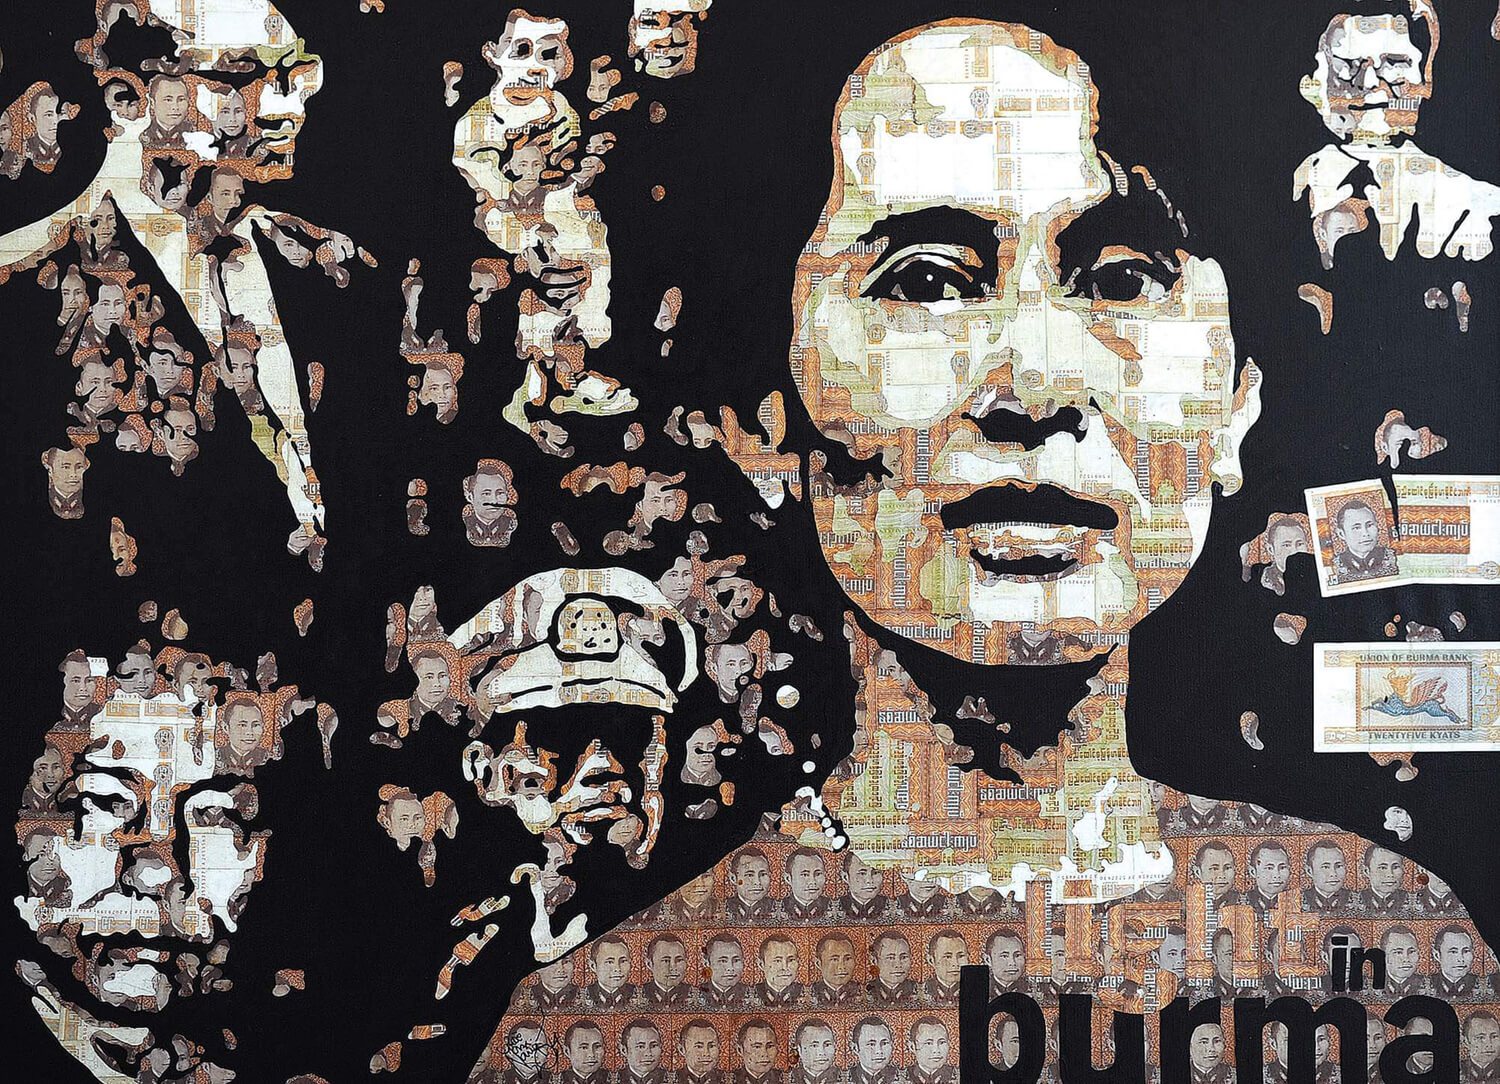 Aung Sun Suu Kyi|Zwe Yan Naing- Mixed media on canvas, 2014, 36 x 48 inches